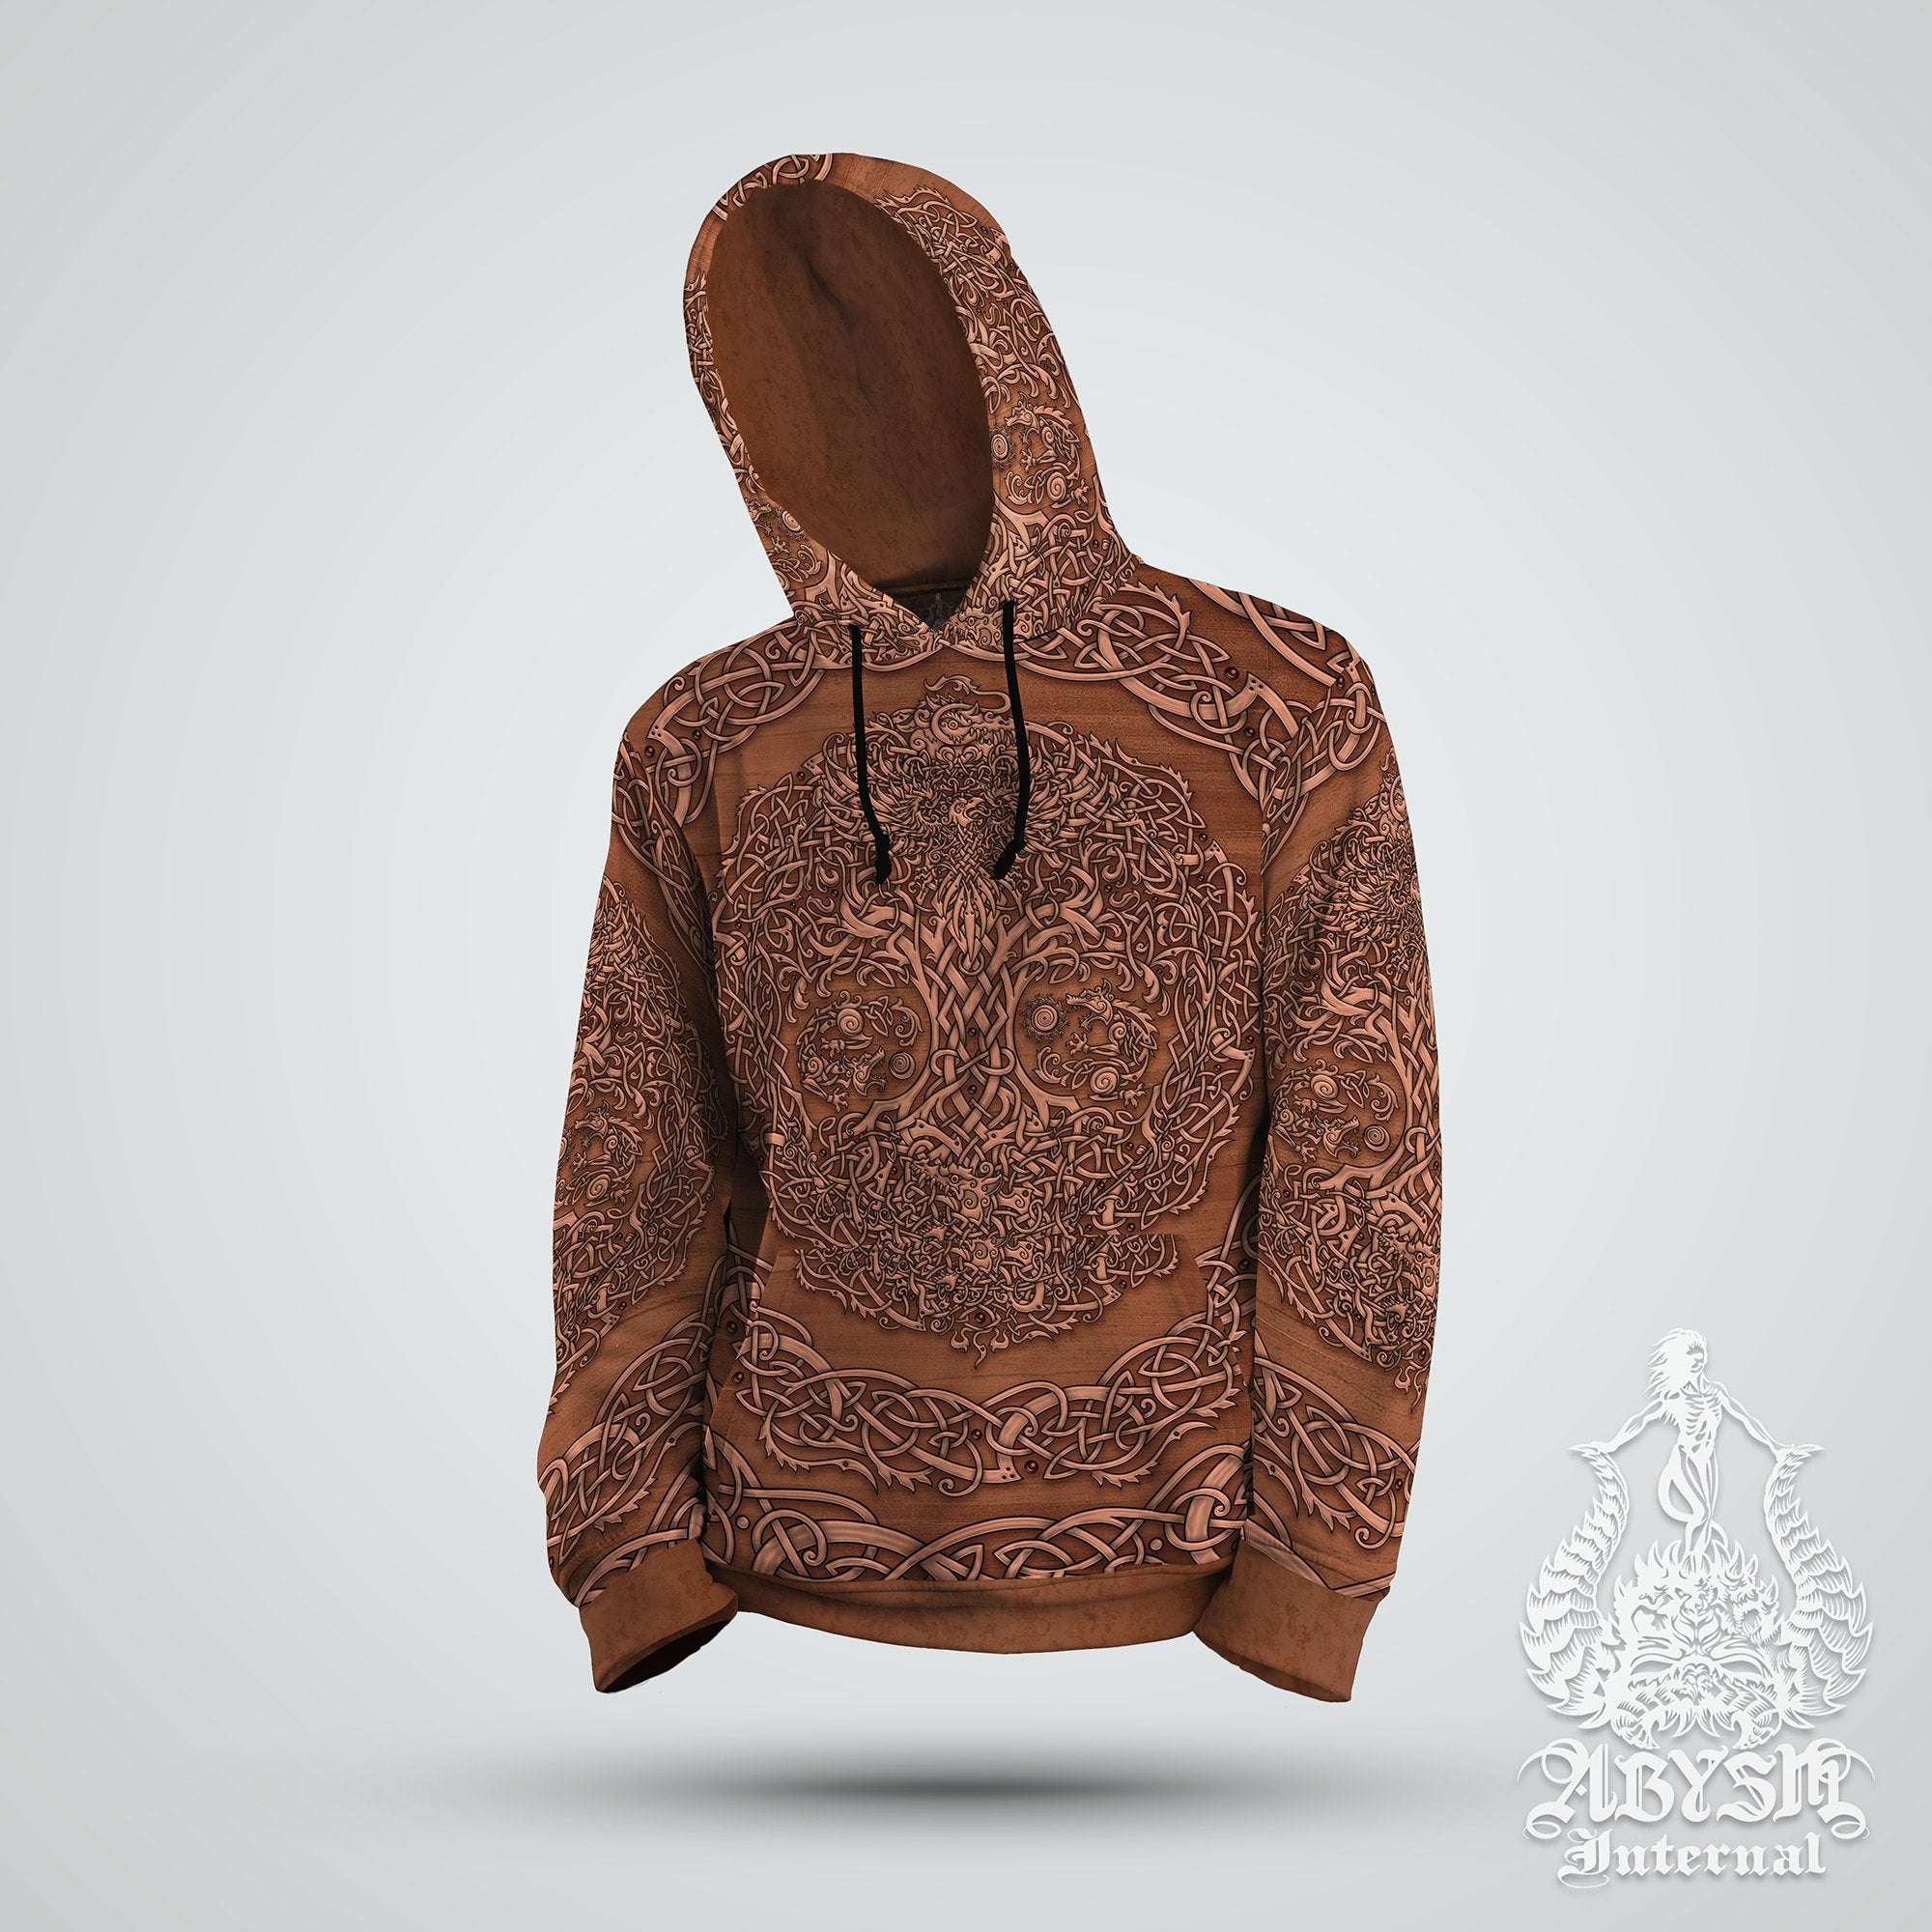 Yggdrasil Sweater, Viking Hoodie, Norse Art Street Outfit, Tree of Life Streetwear, Nordic Pagan Clothing, Unisex - Wood - Abysm Internal